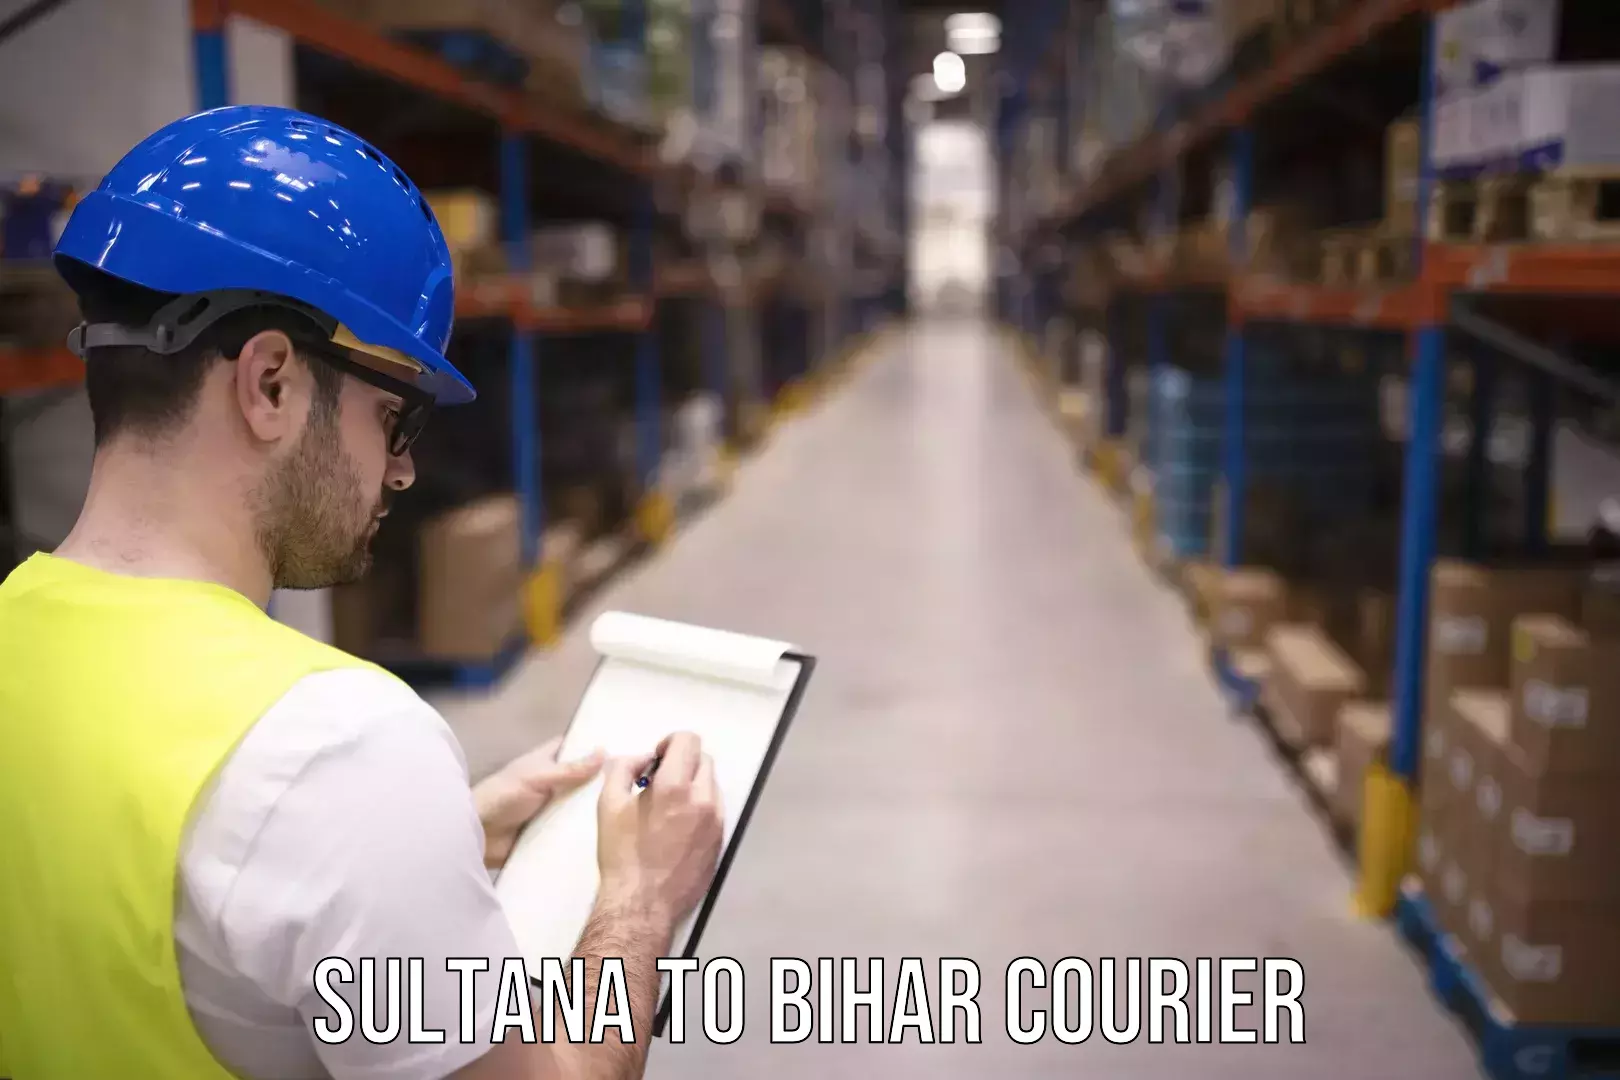 Courier service efficiency Sultana to Aurangabad Bihar